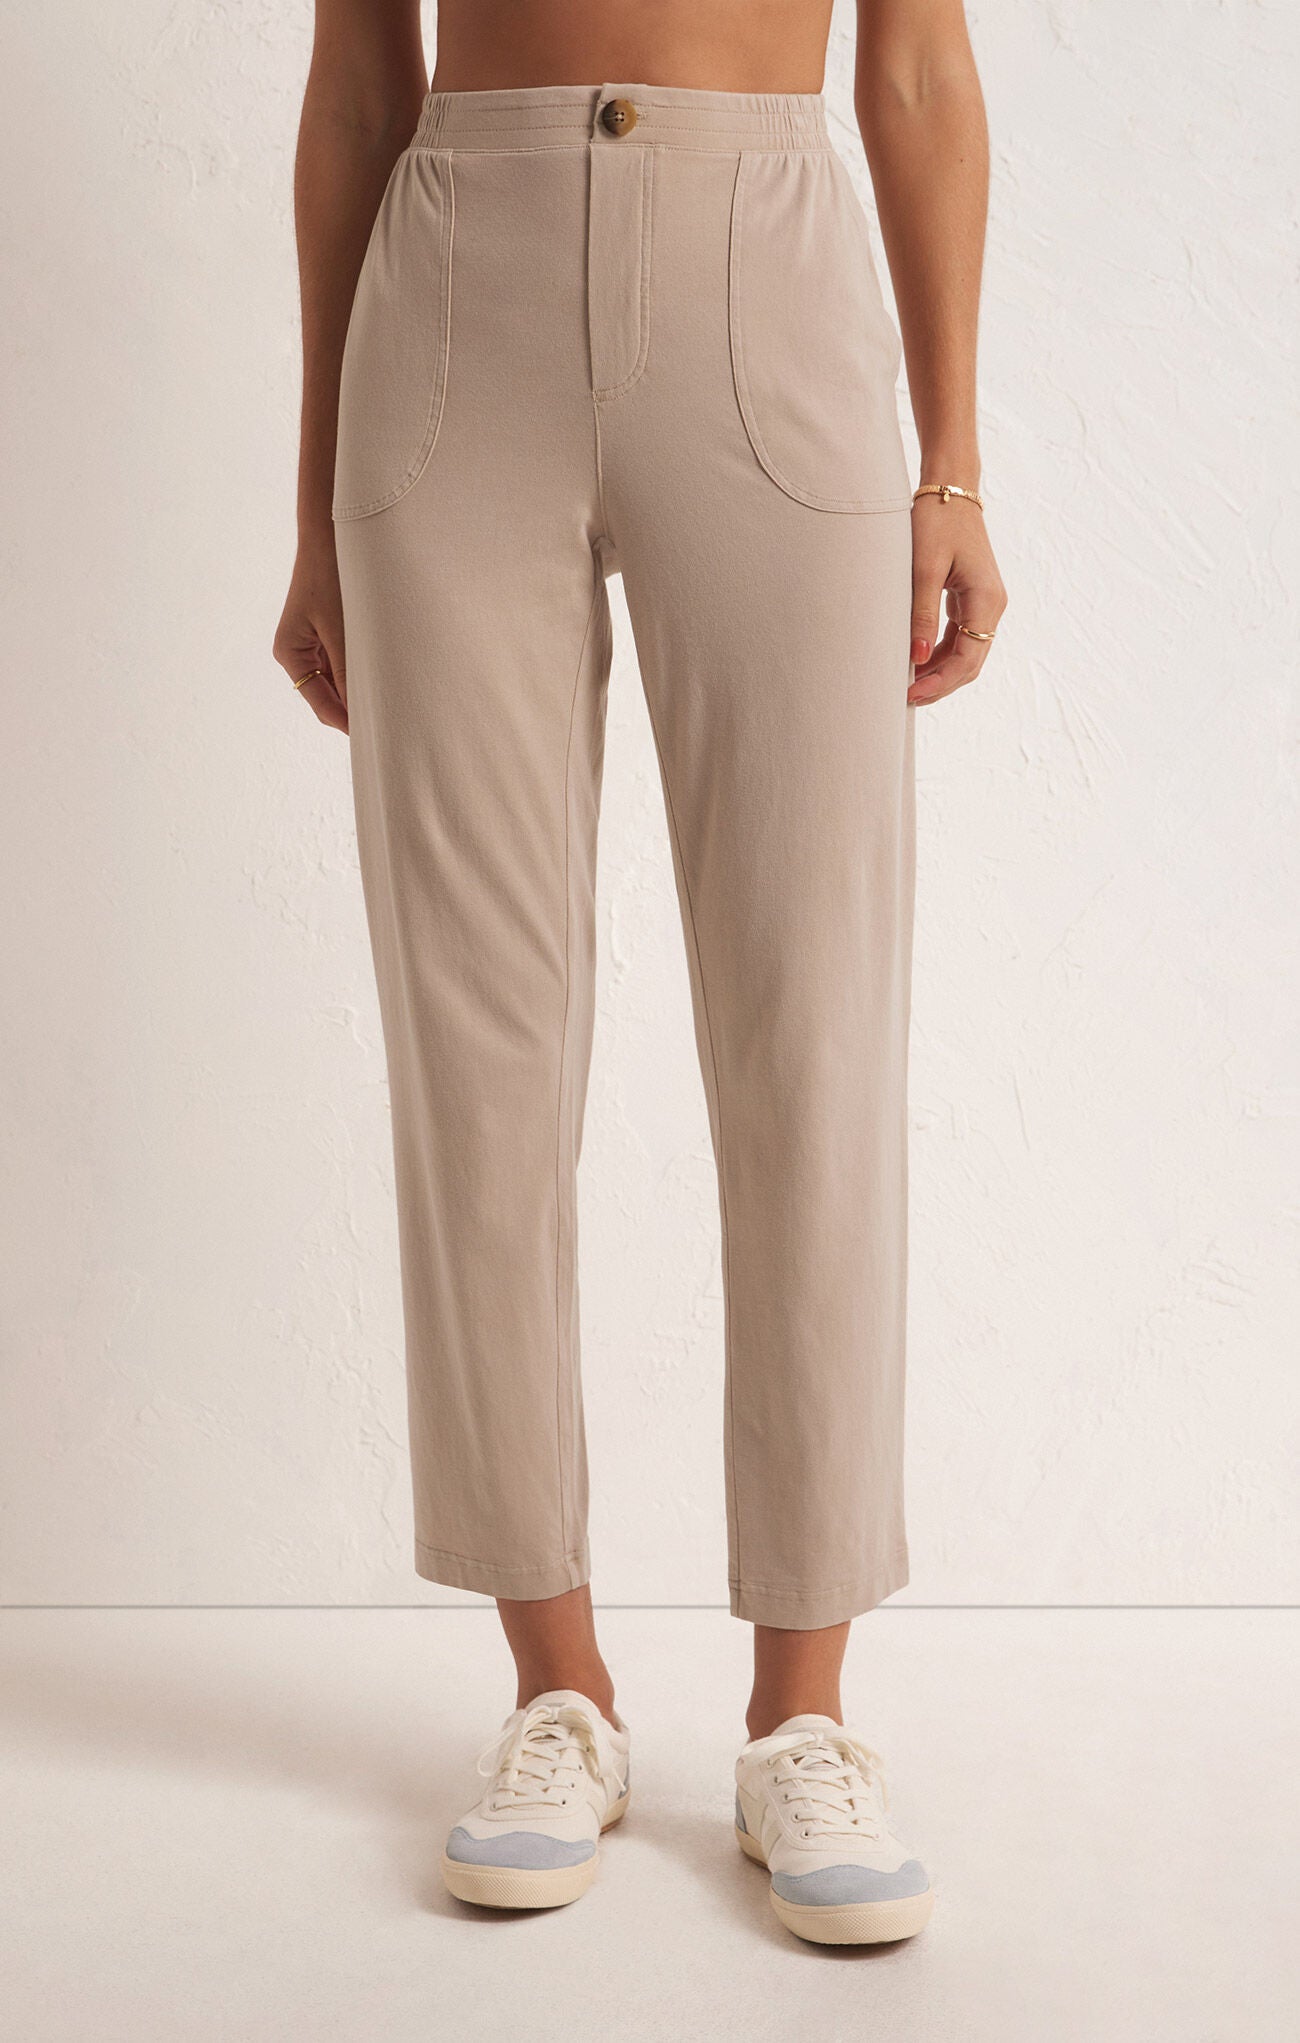 Amazon.com: Hanes Originals Joggers, 100% Cotton Jersey Sweatpants for Women,  29